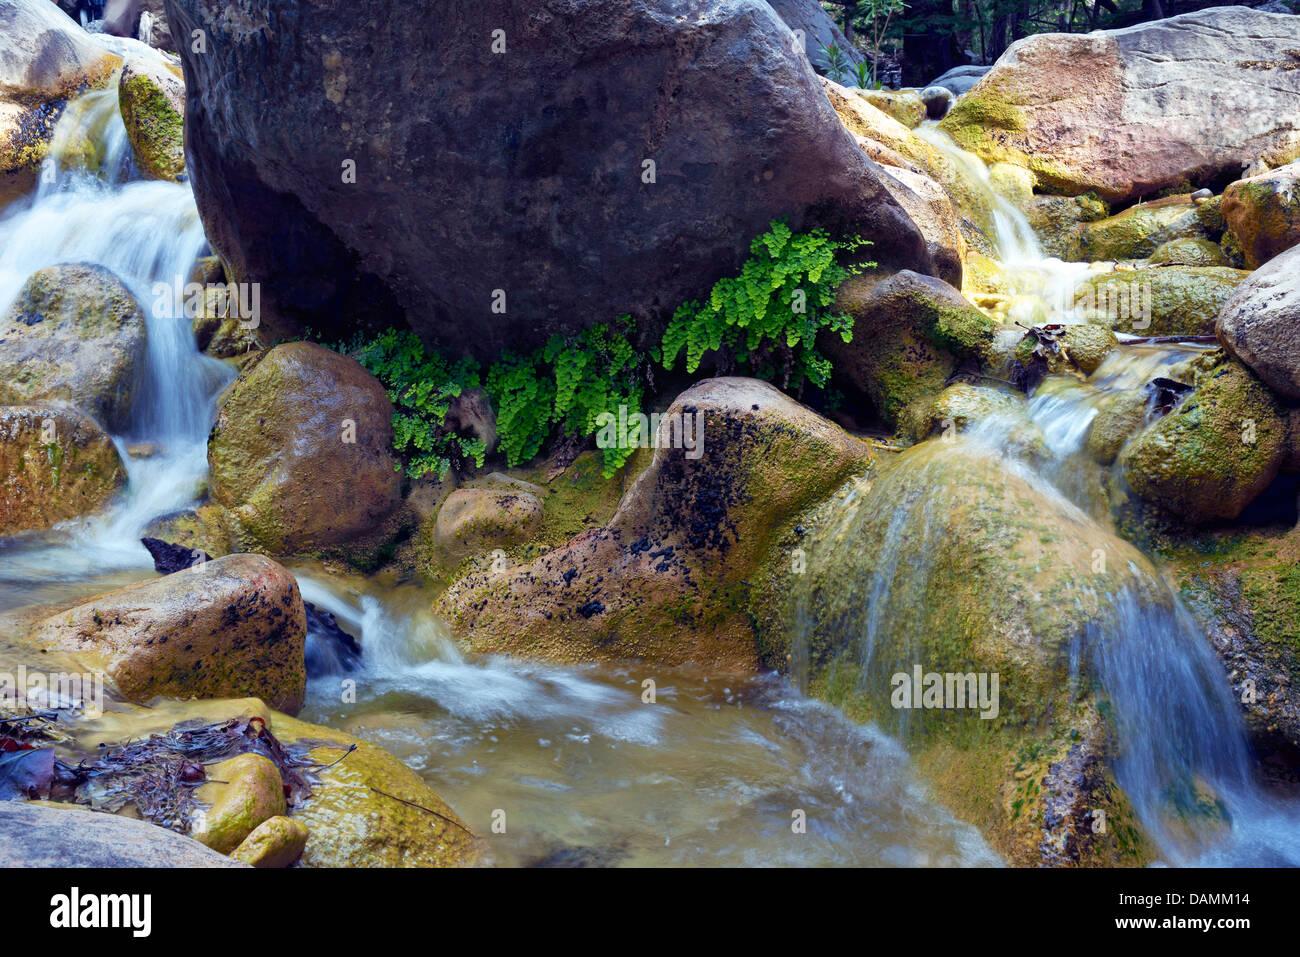 venus-hair fern, maidenhair fern, true maidenhair (Adiantum capillus-veneris), Samaria river in Samaria canyon in May, Greece, Crete Stock Photo